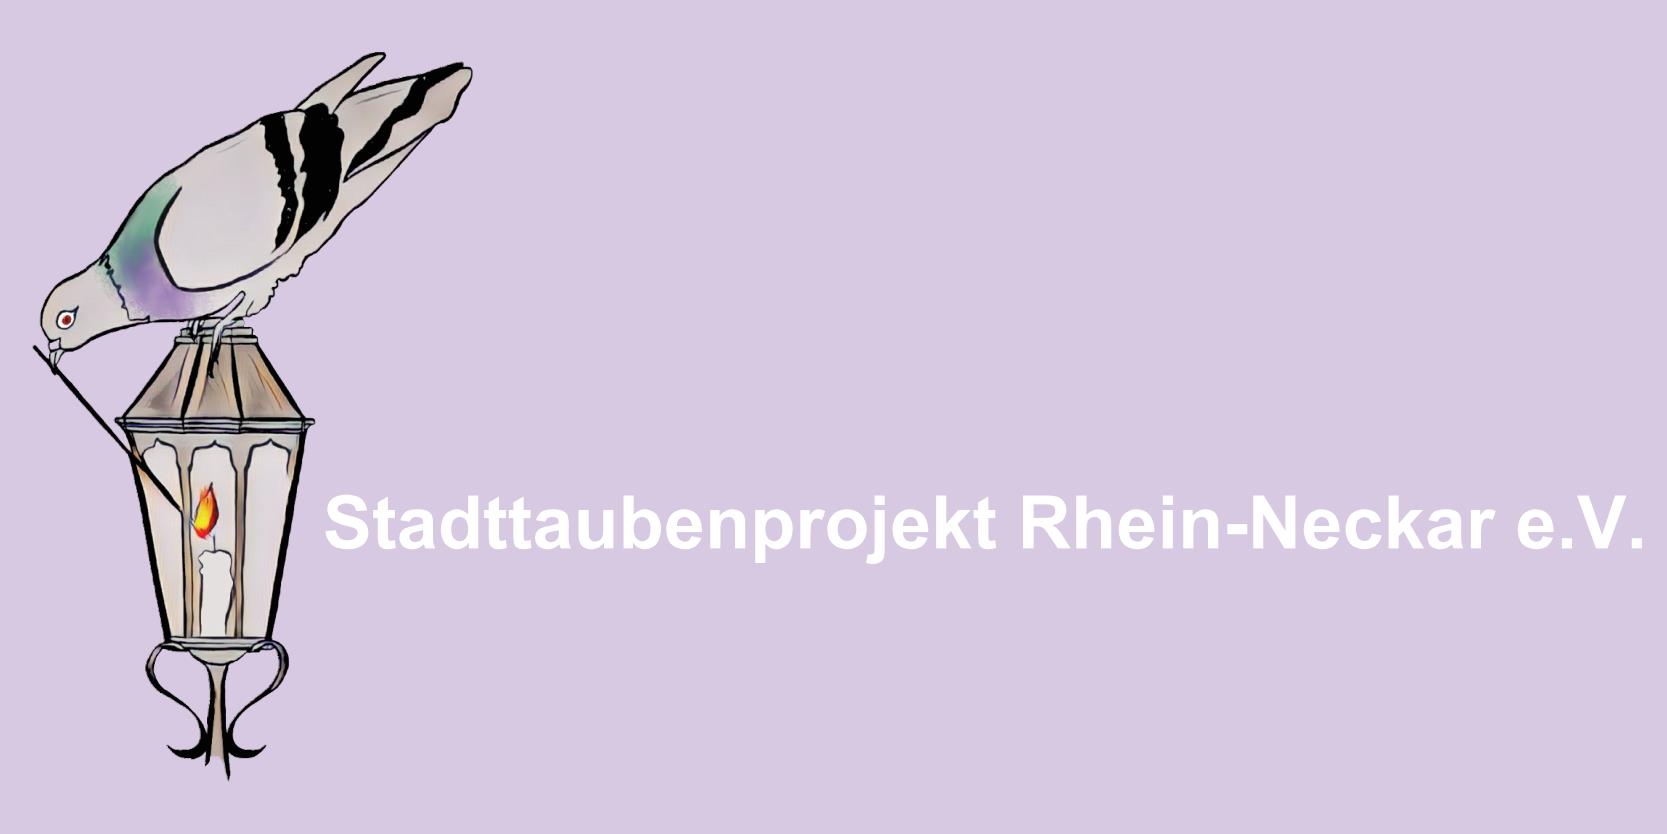 Stadttaubenprojekt Rhein-Neckar